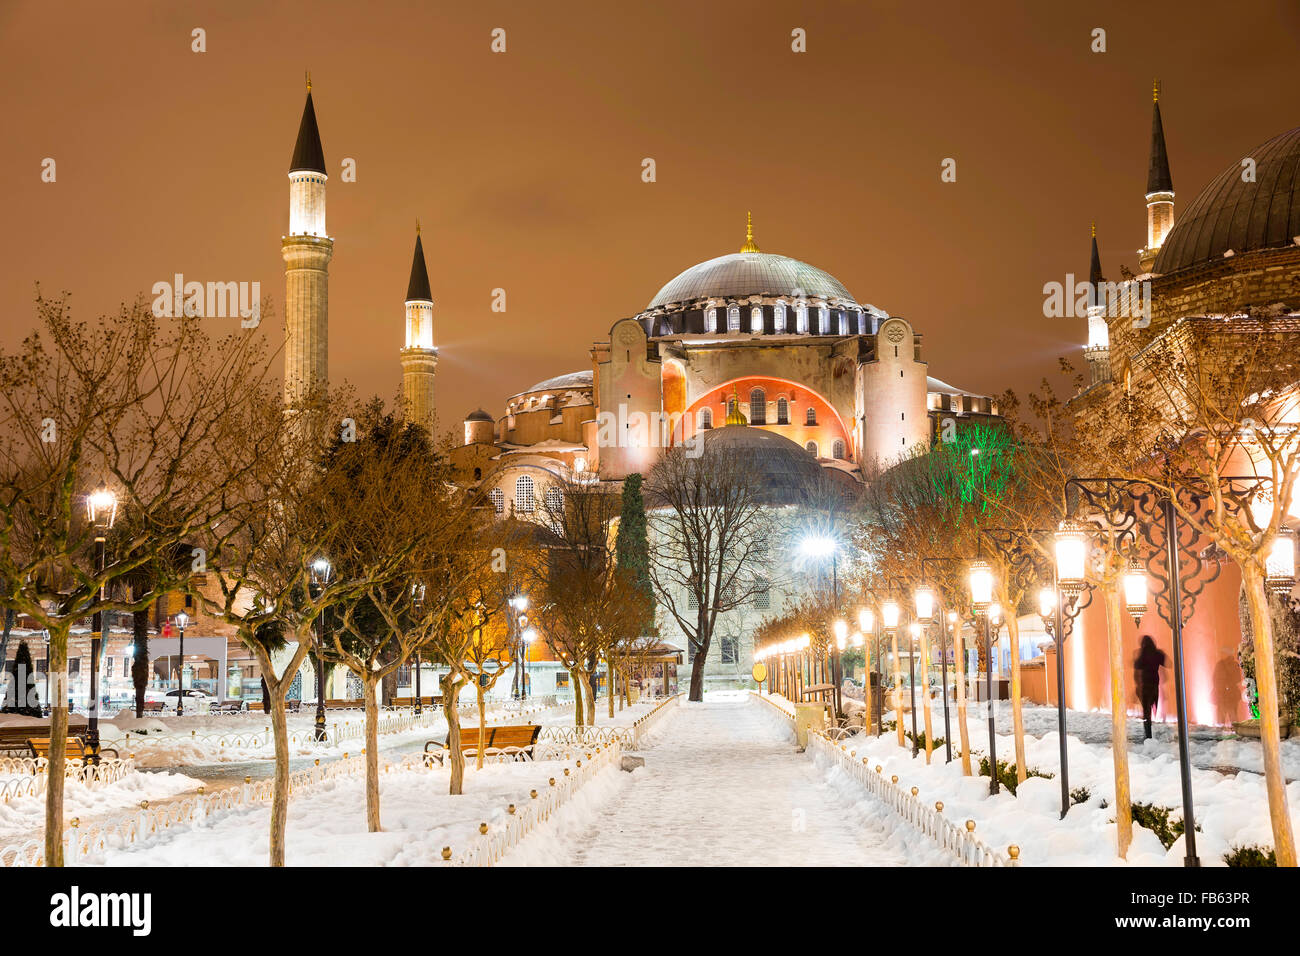 View of Hagia Sophia, Aya Sofya, museum in a snowy winter night in Istanbul Turkey Stock Photo